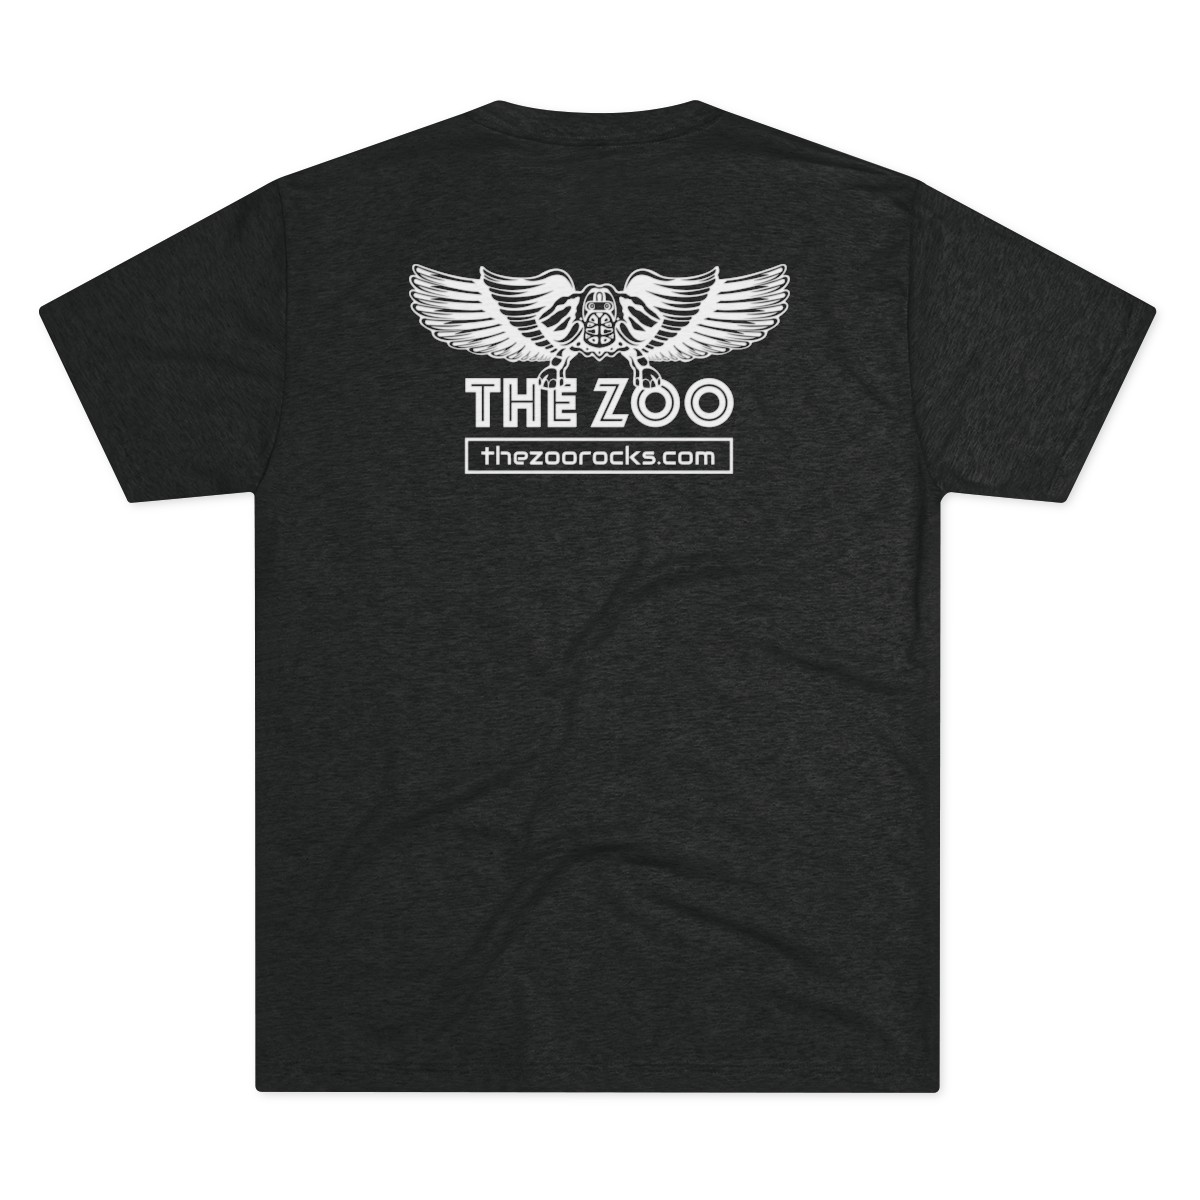 THE ZOO Tri-Blend Crew Tee "If It Ain't Woke, Don't Fix It." product thumbnail image